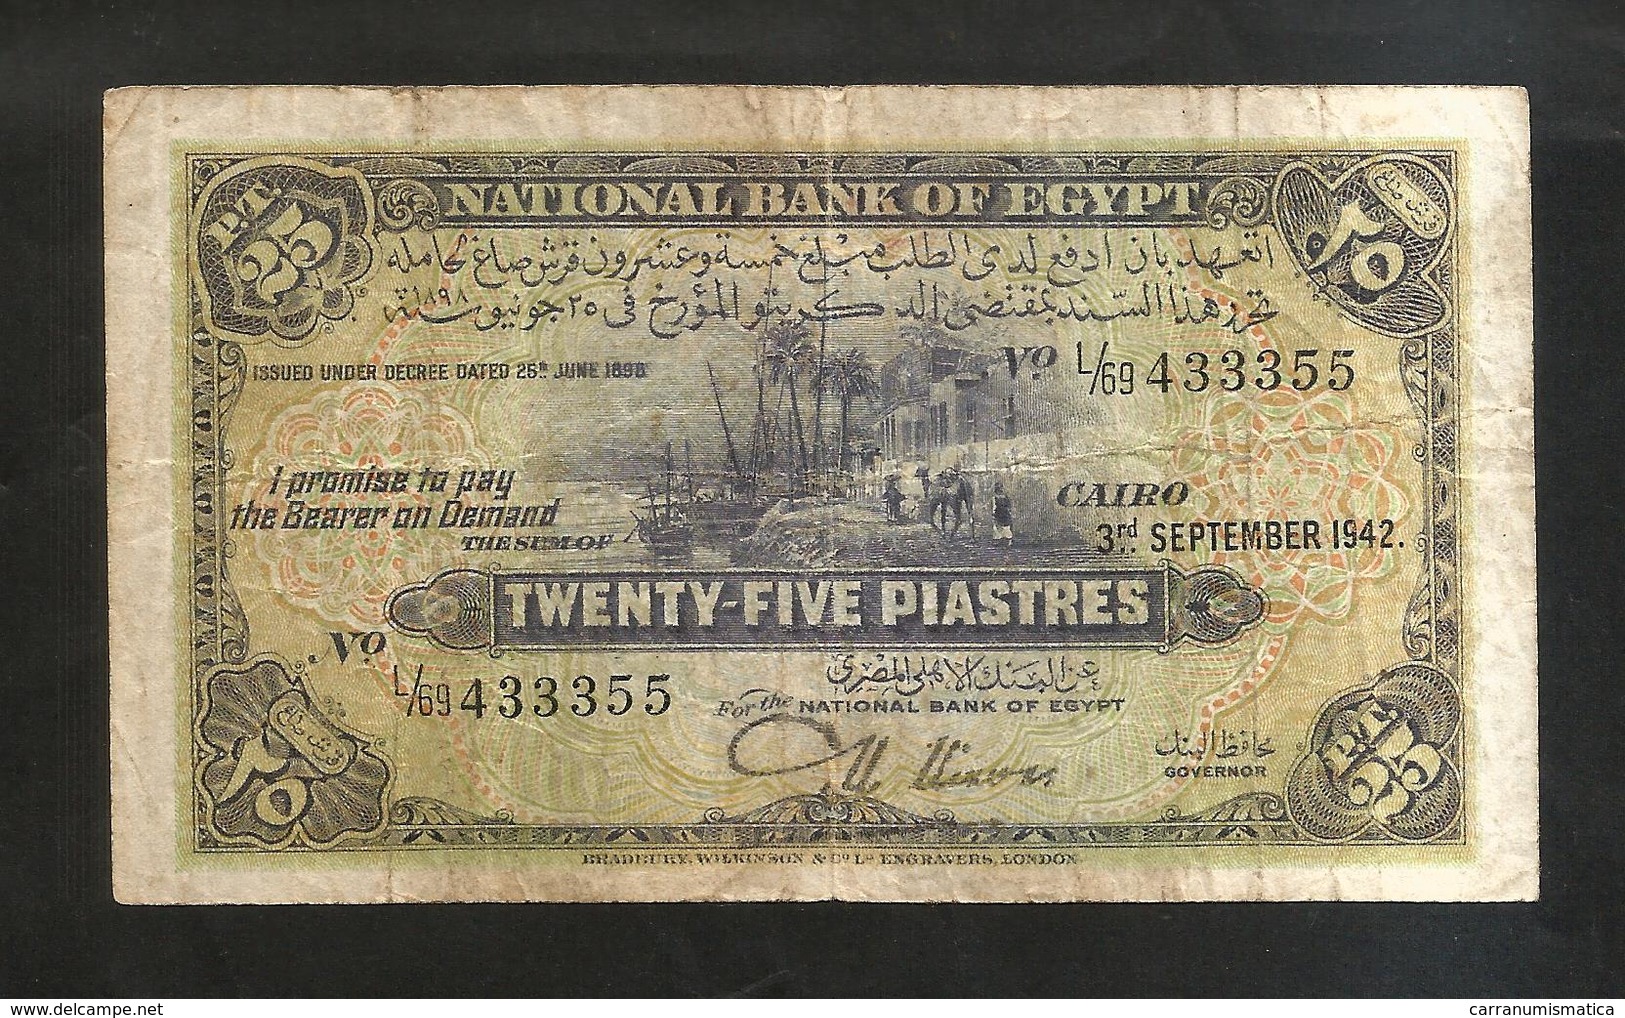 EGYPT / EGITTO - NATIONAL BANK OF EGYPT - 25 PIASTRES (Cairo - 3 September 1942) - Egitto